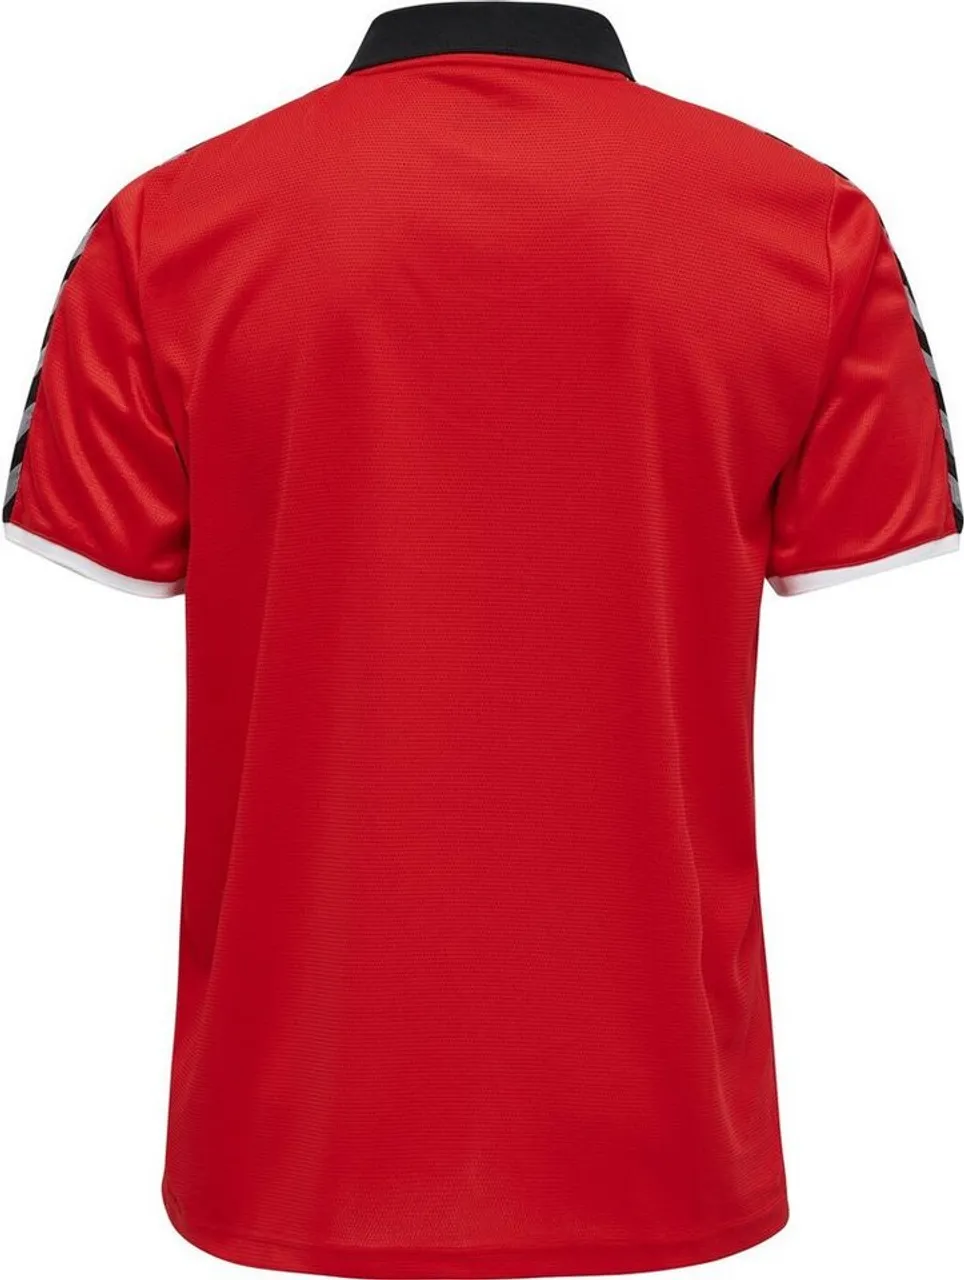 hummel Poloshirt AUTHENTIC FUNCTIONAL Herrren Sport-Poloshirt rot/schwarz